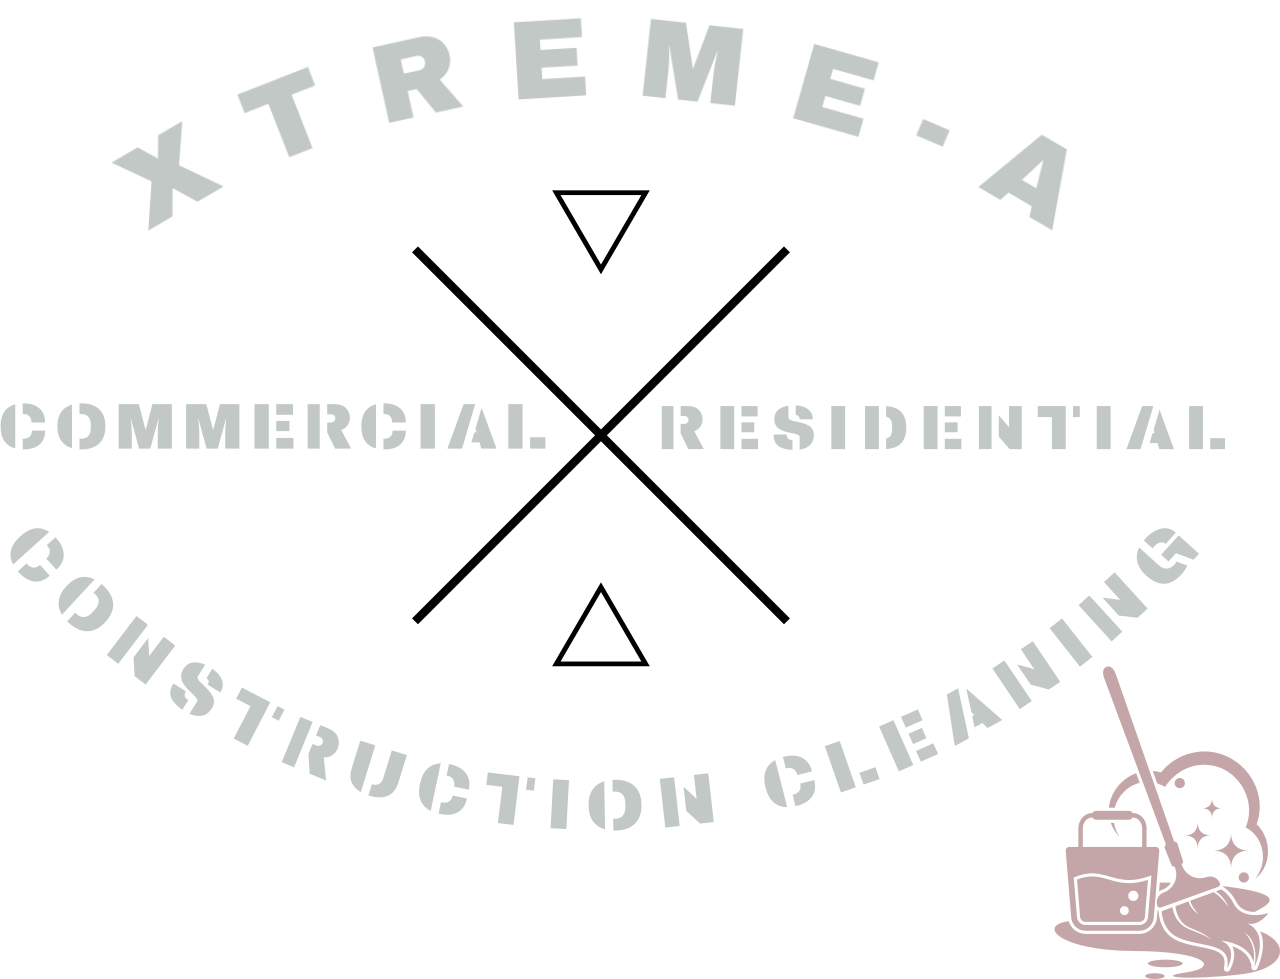 XTREME-A's web page